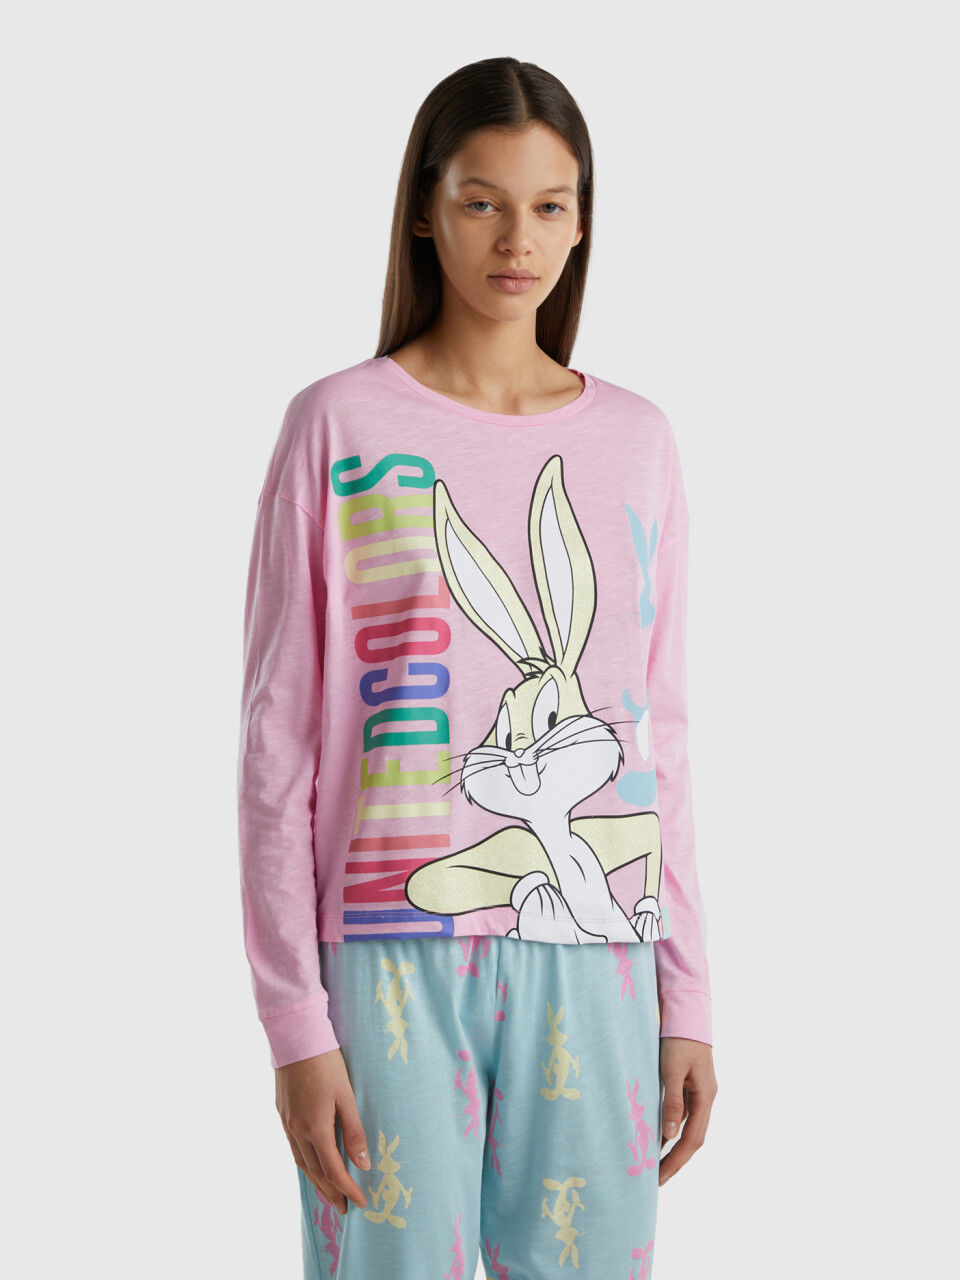 Bugs Bunny & Lola t-Shirt